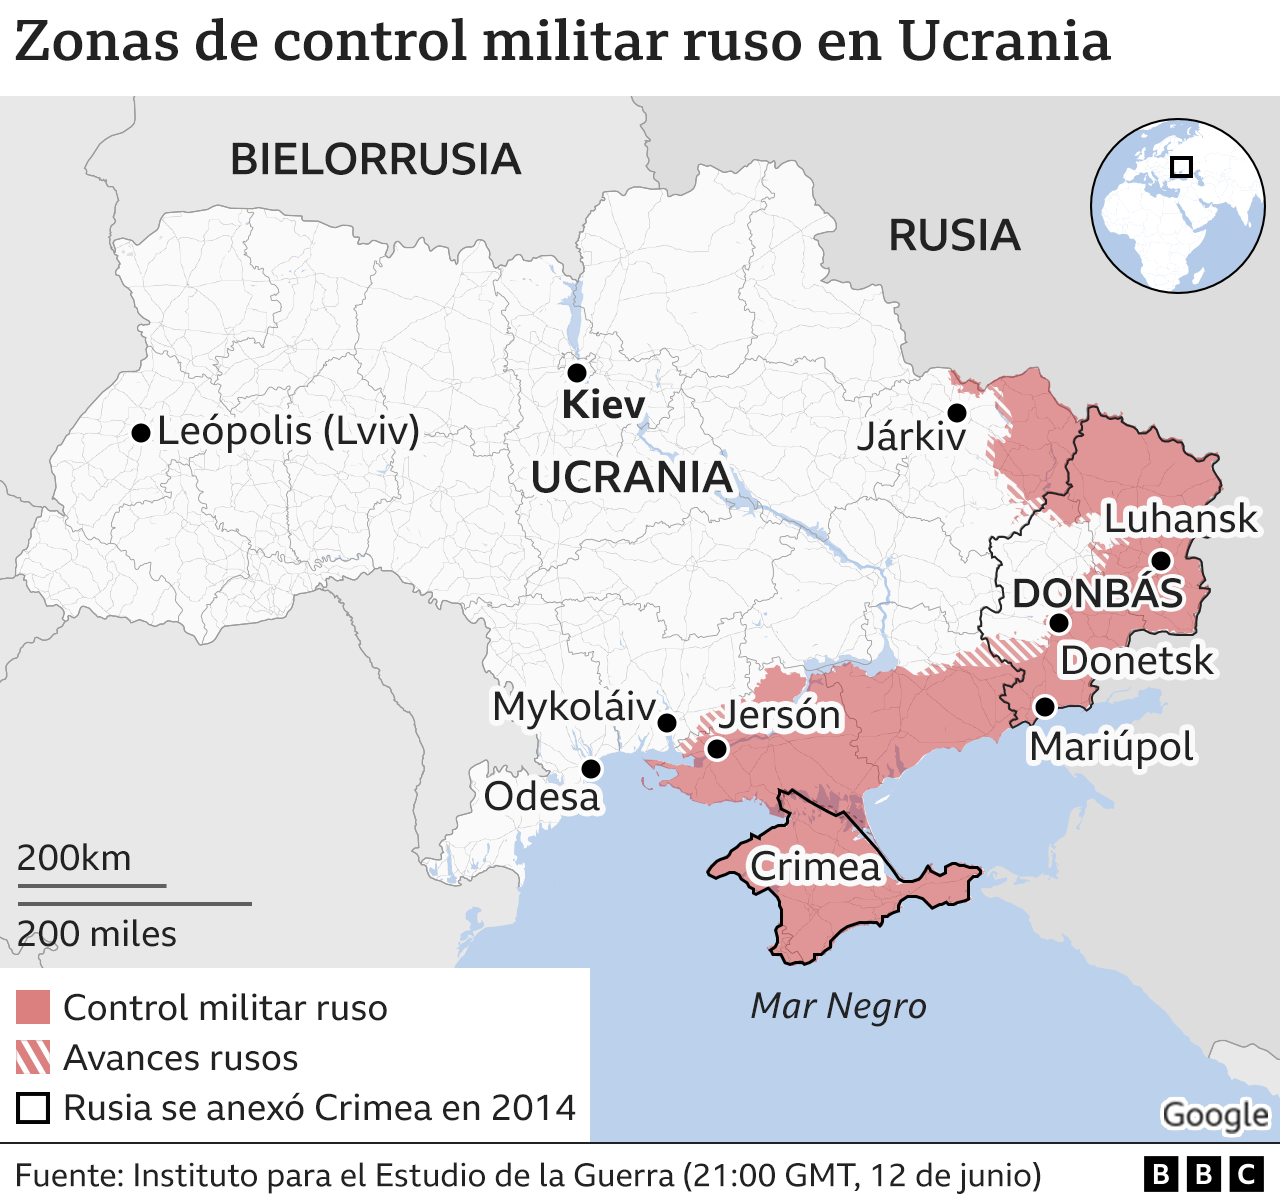 Mapa con las zonas controladas militarmente por Rusia en Ucrania.